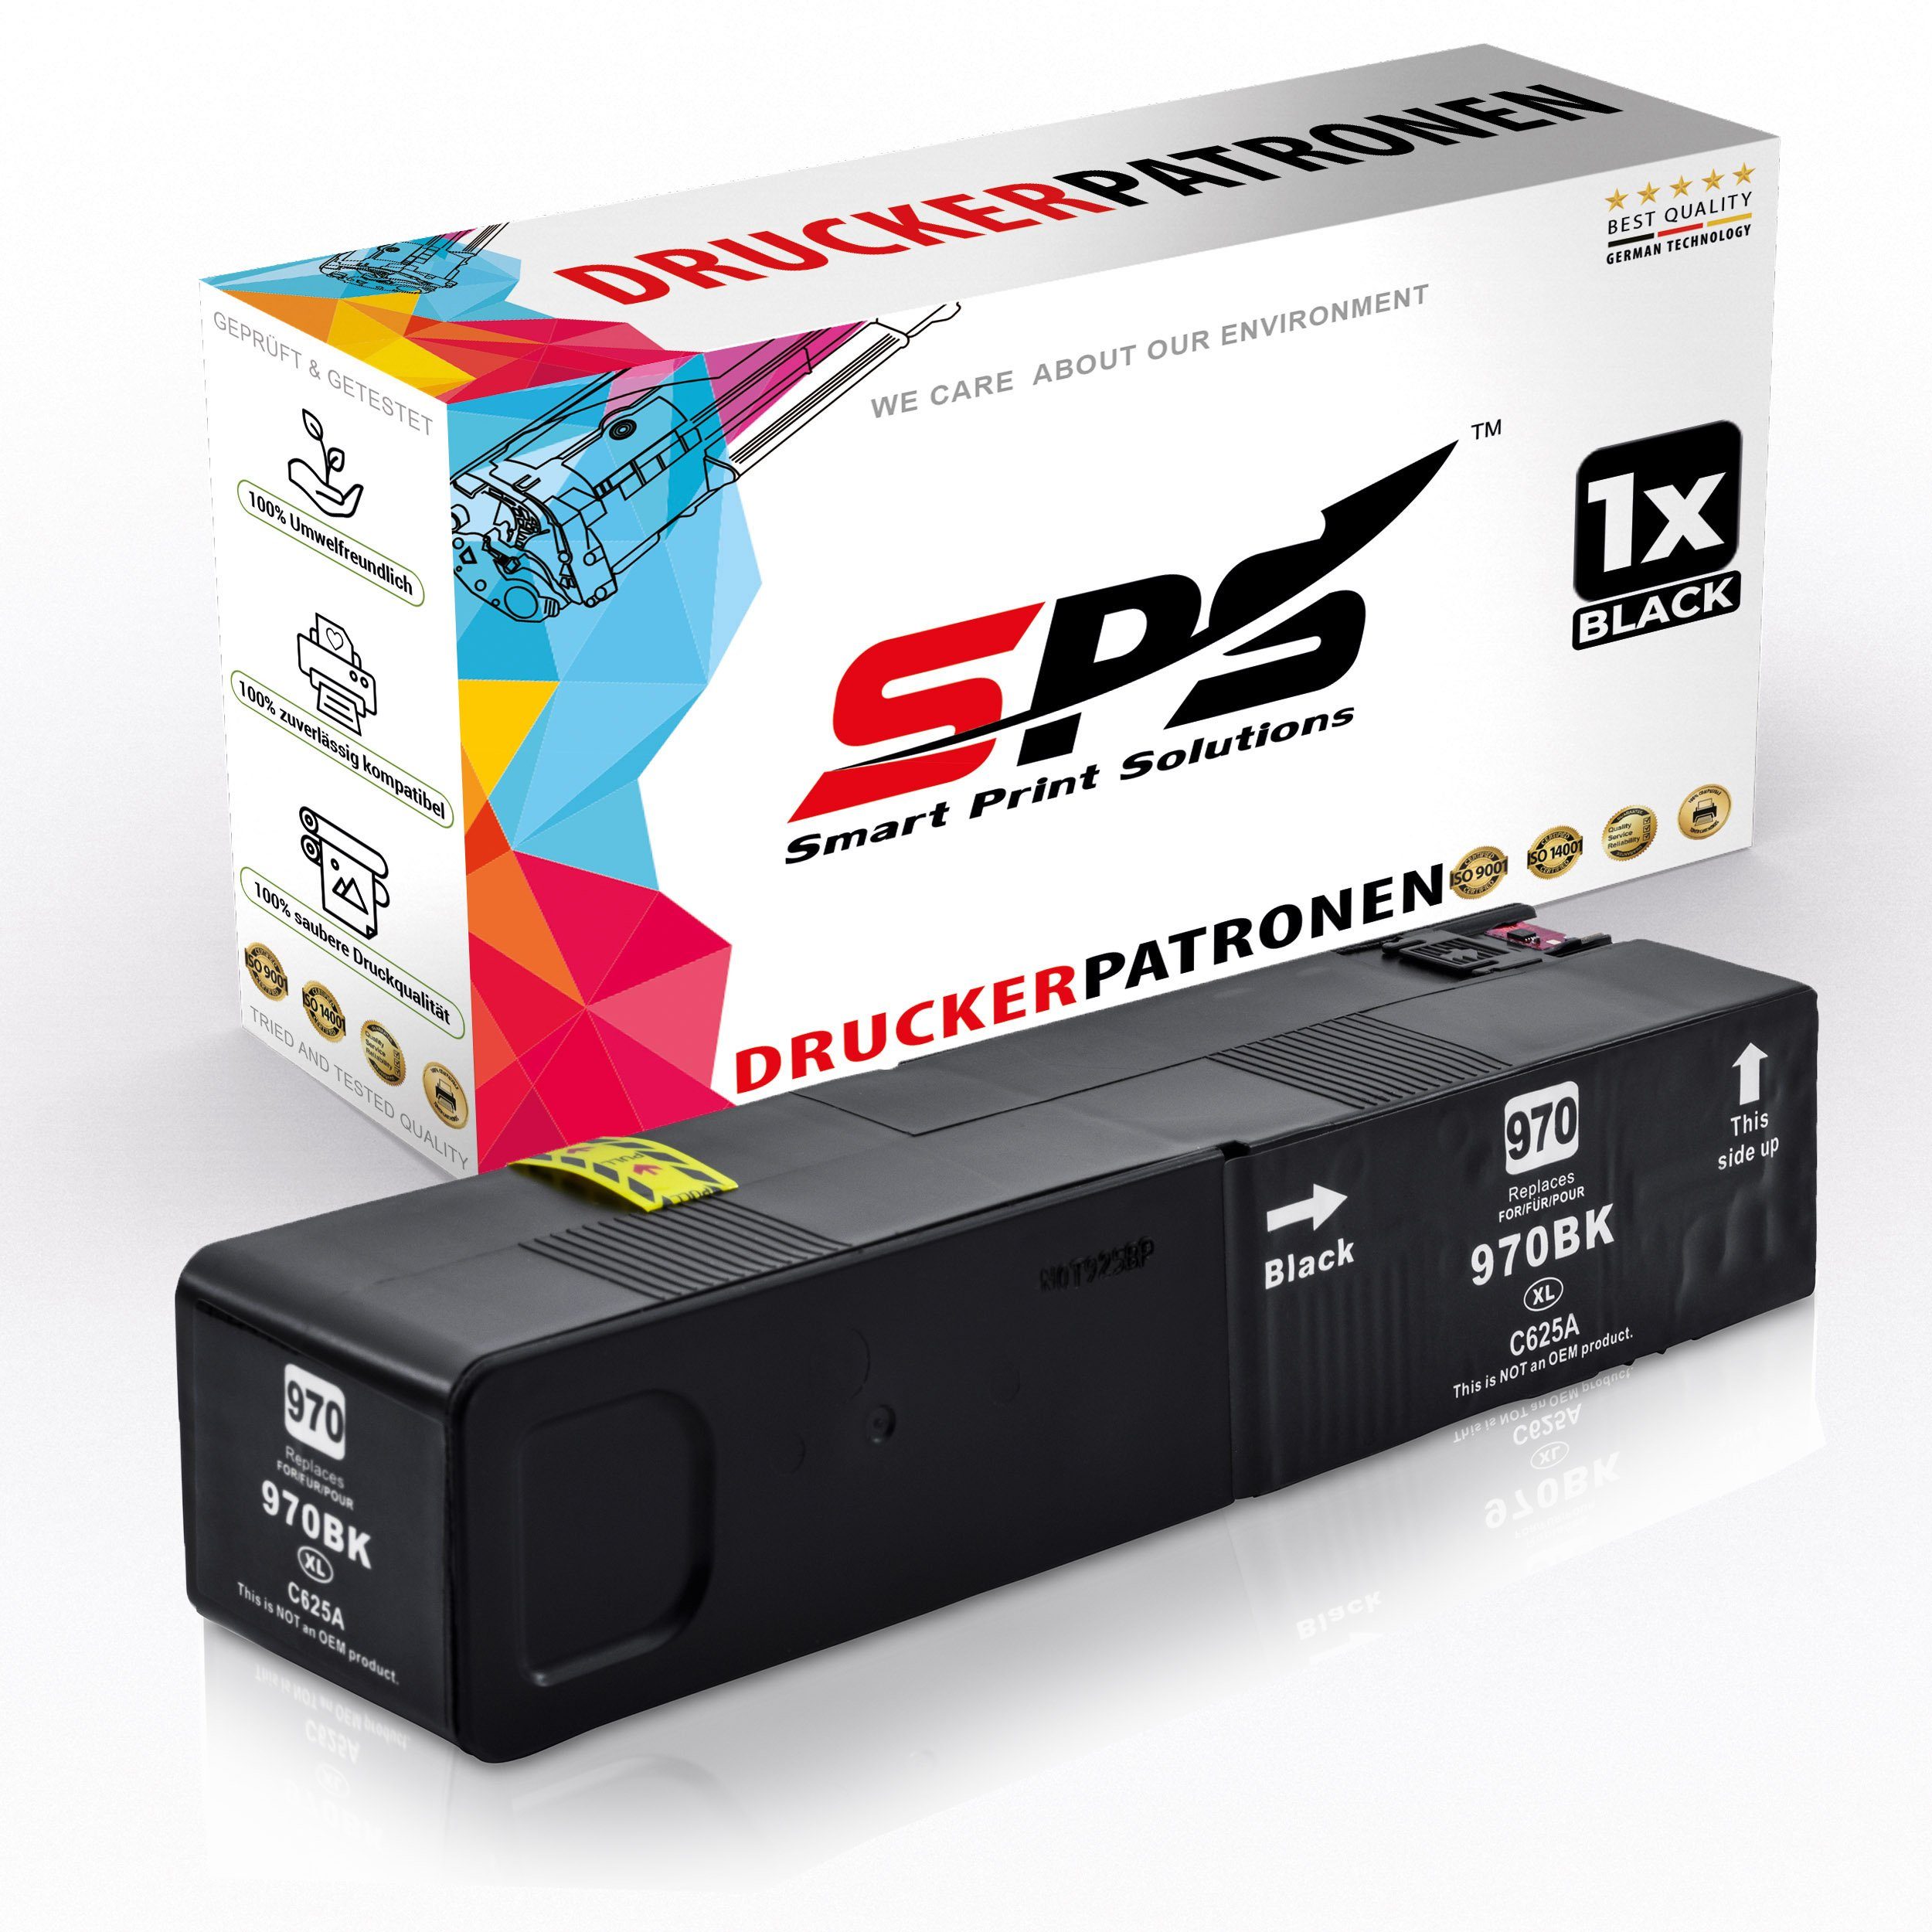 SPS Kompatibel für HP Officejet Pro X476DW (CN461A) Tintenpatrone (1er Pack)